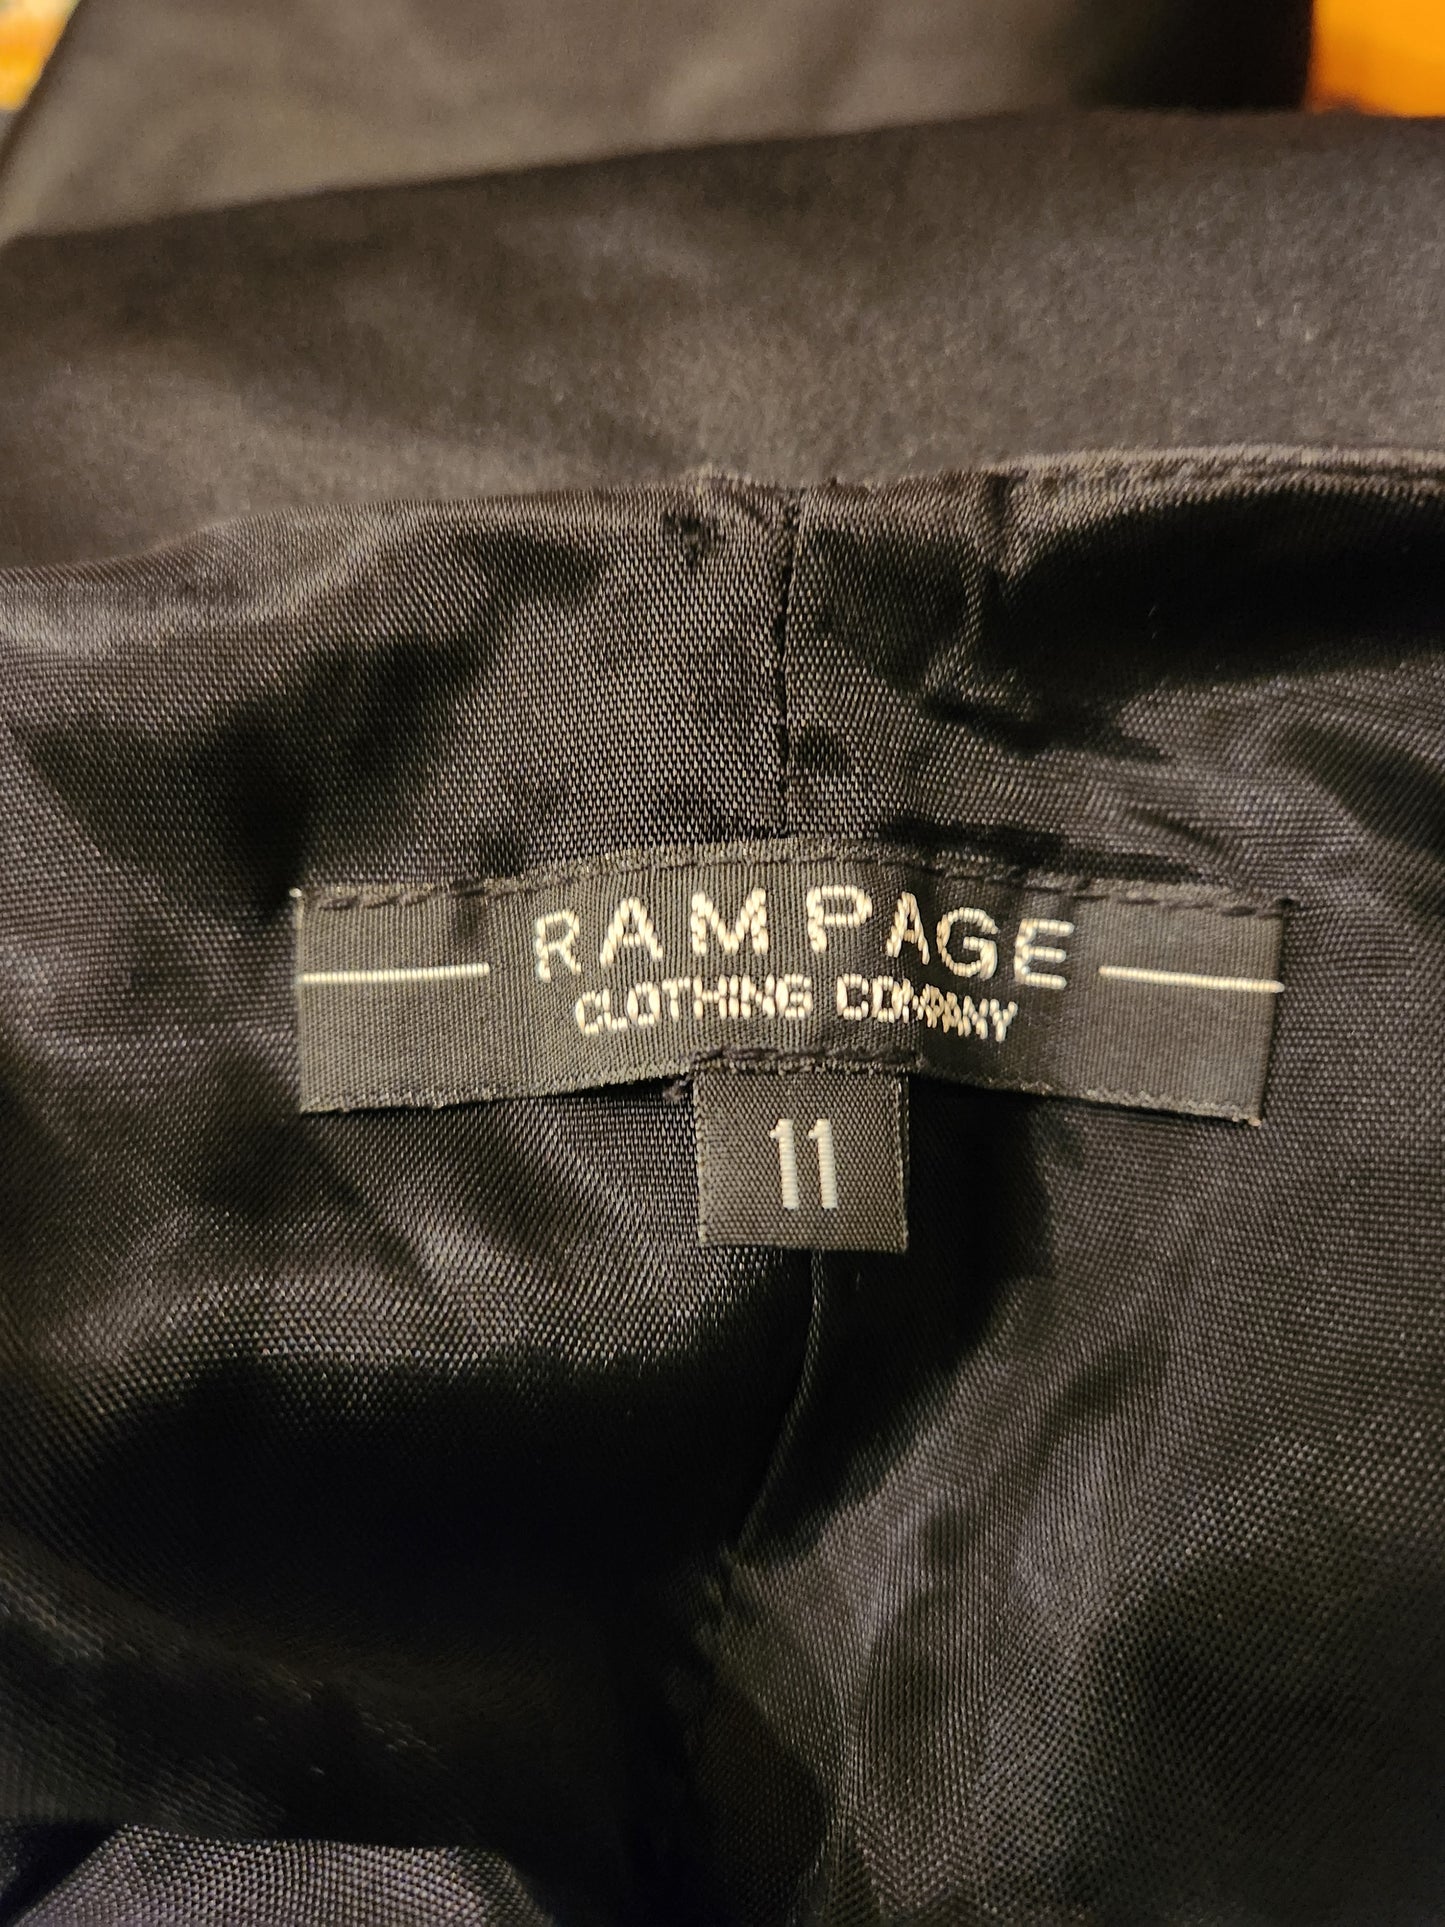 (NWT) Rampage - Black Pink Rhinestones Dress